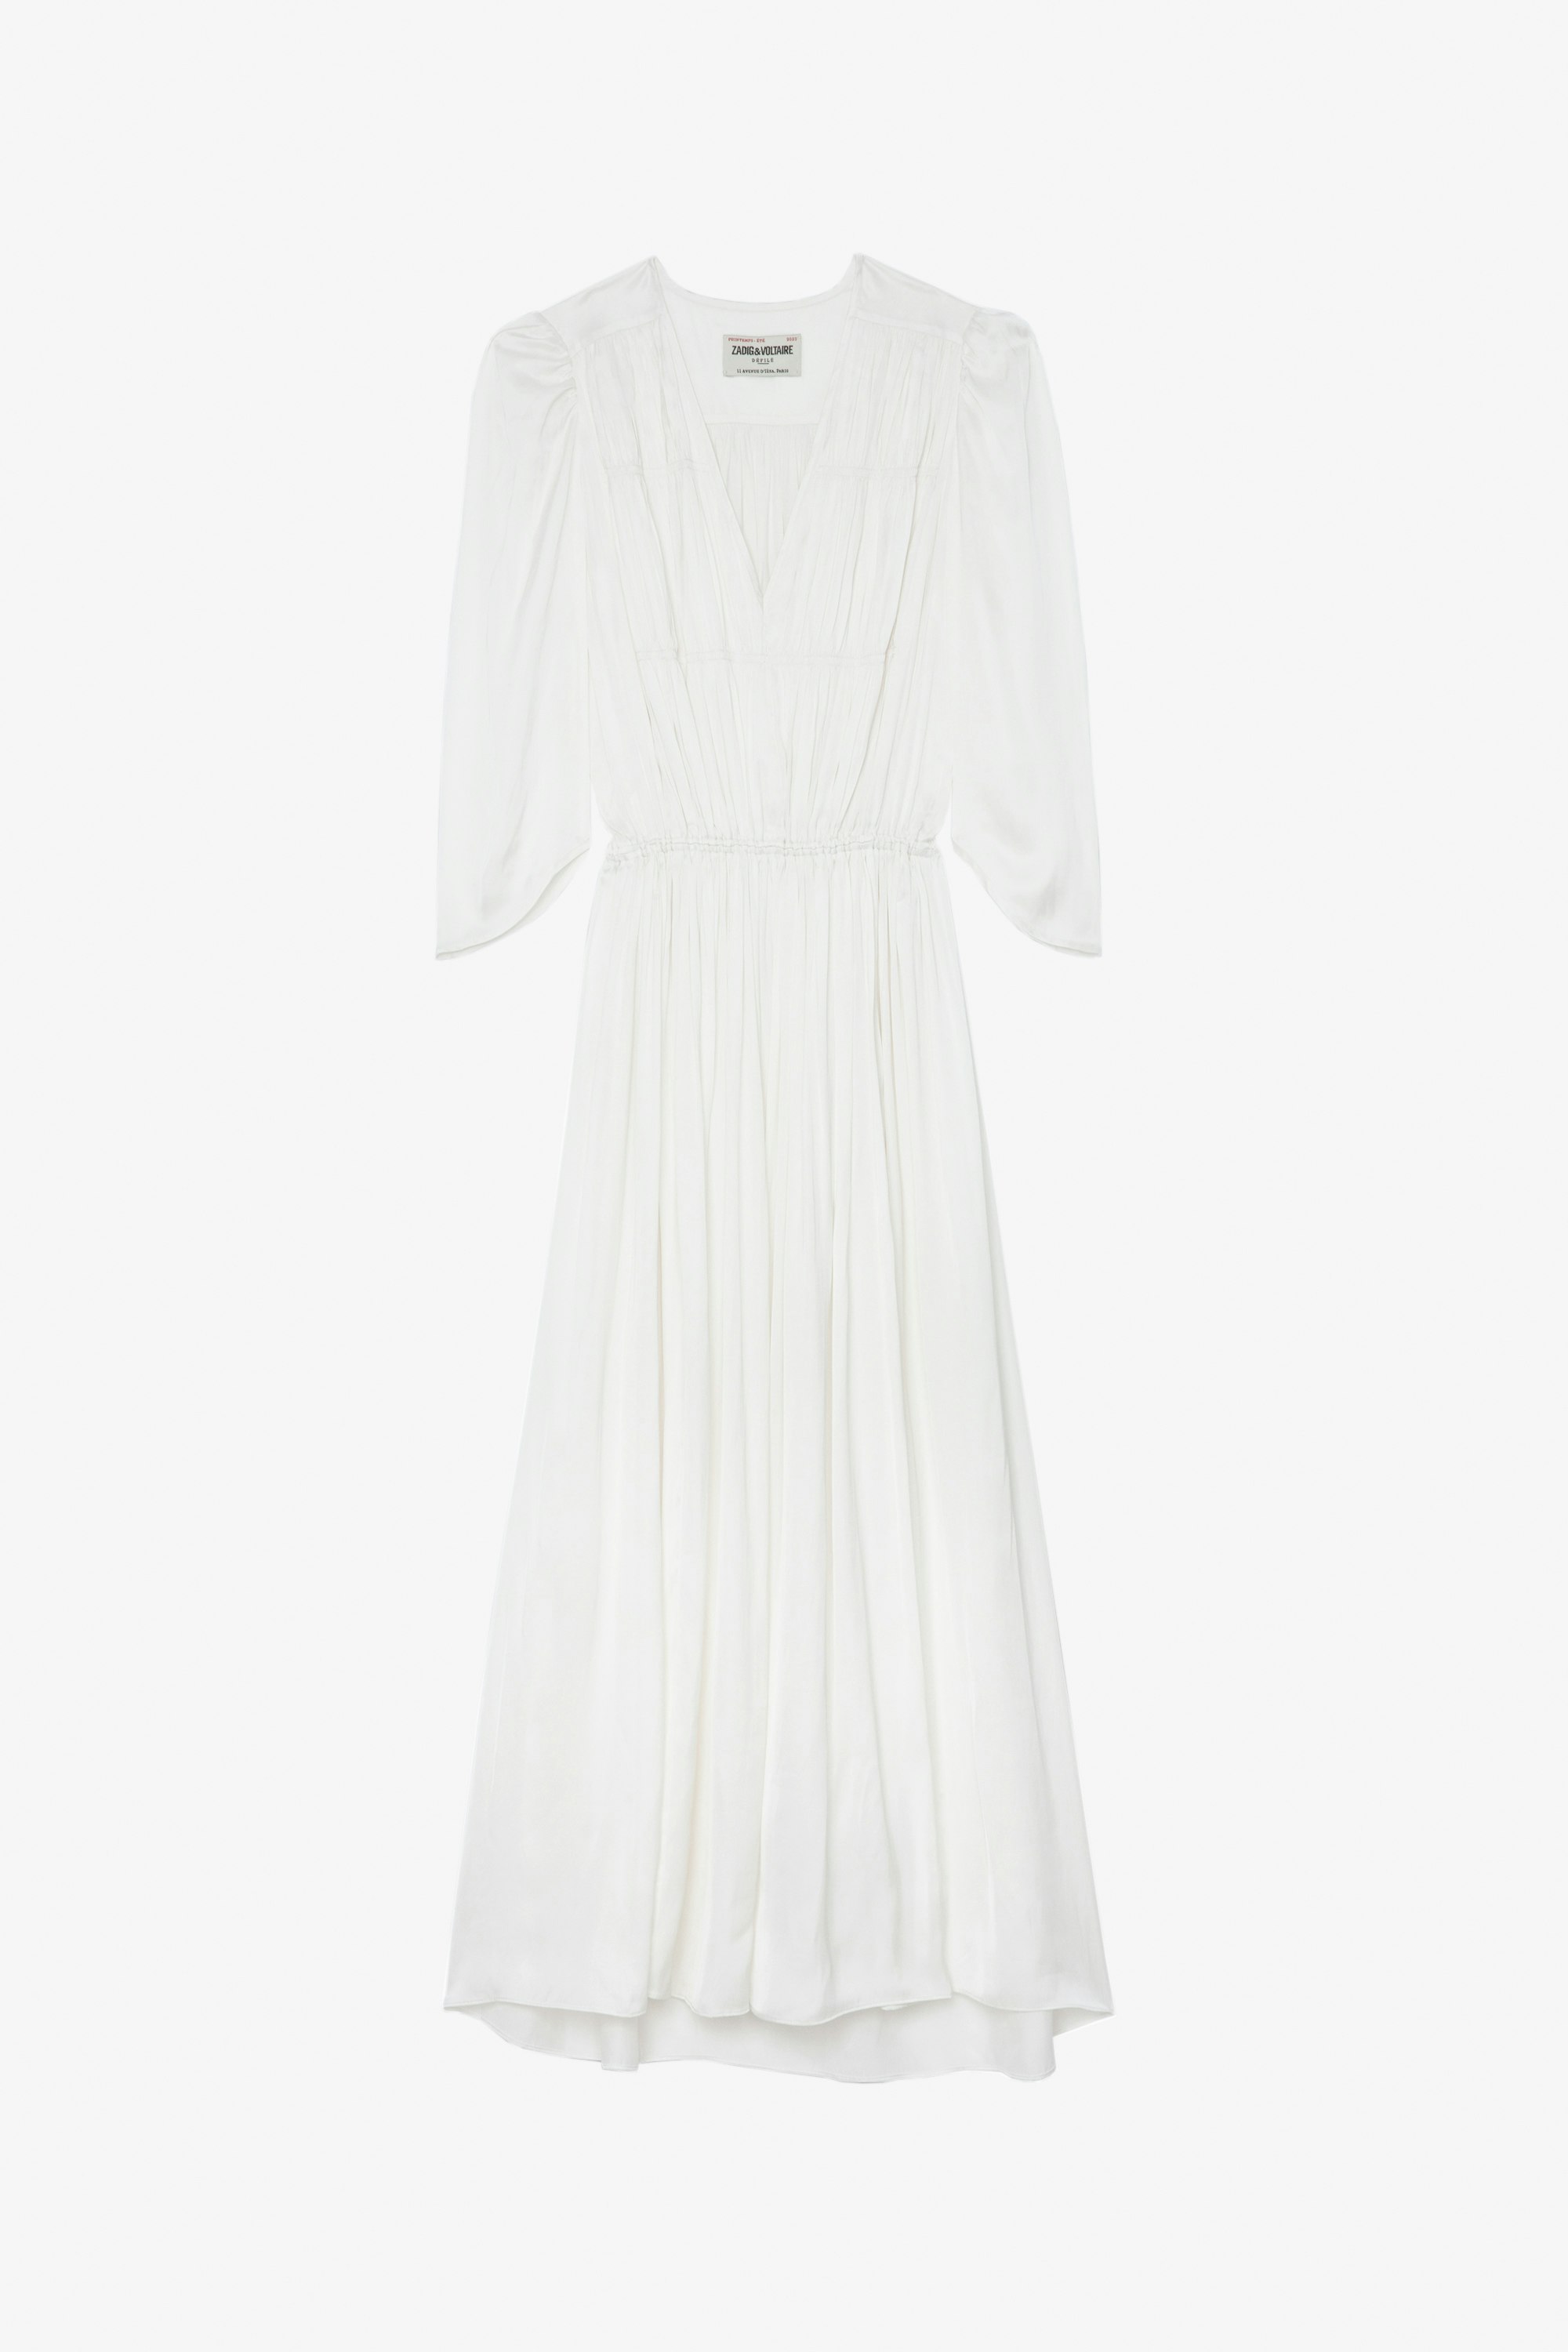 Ryoko Satin Dress - Women's long white satin dress, draped with asymmetrical sleeves